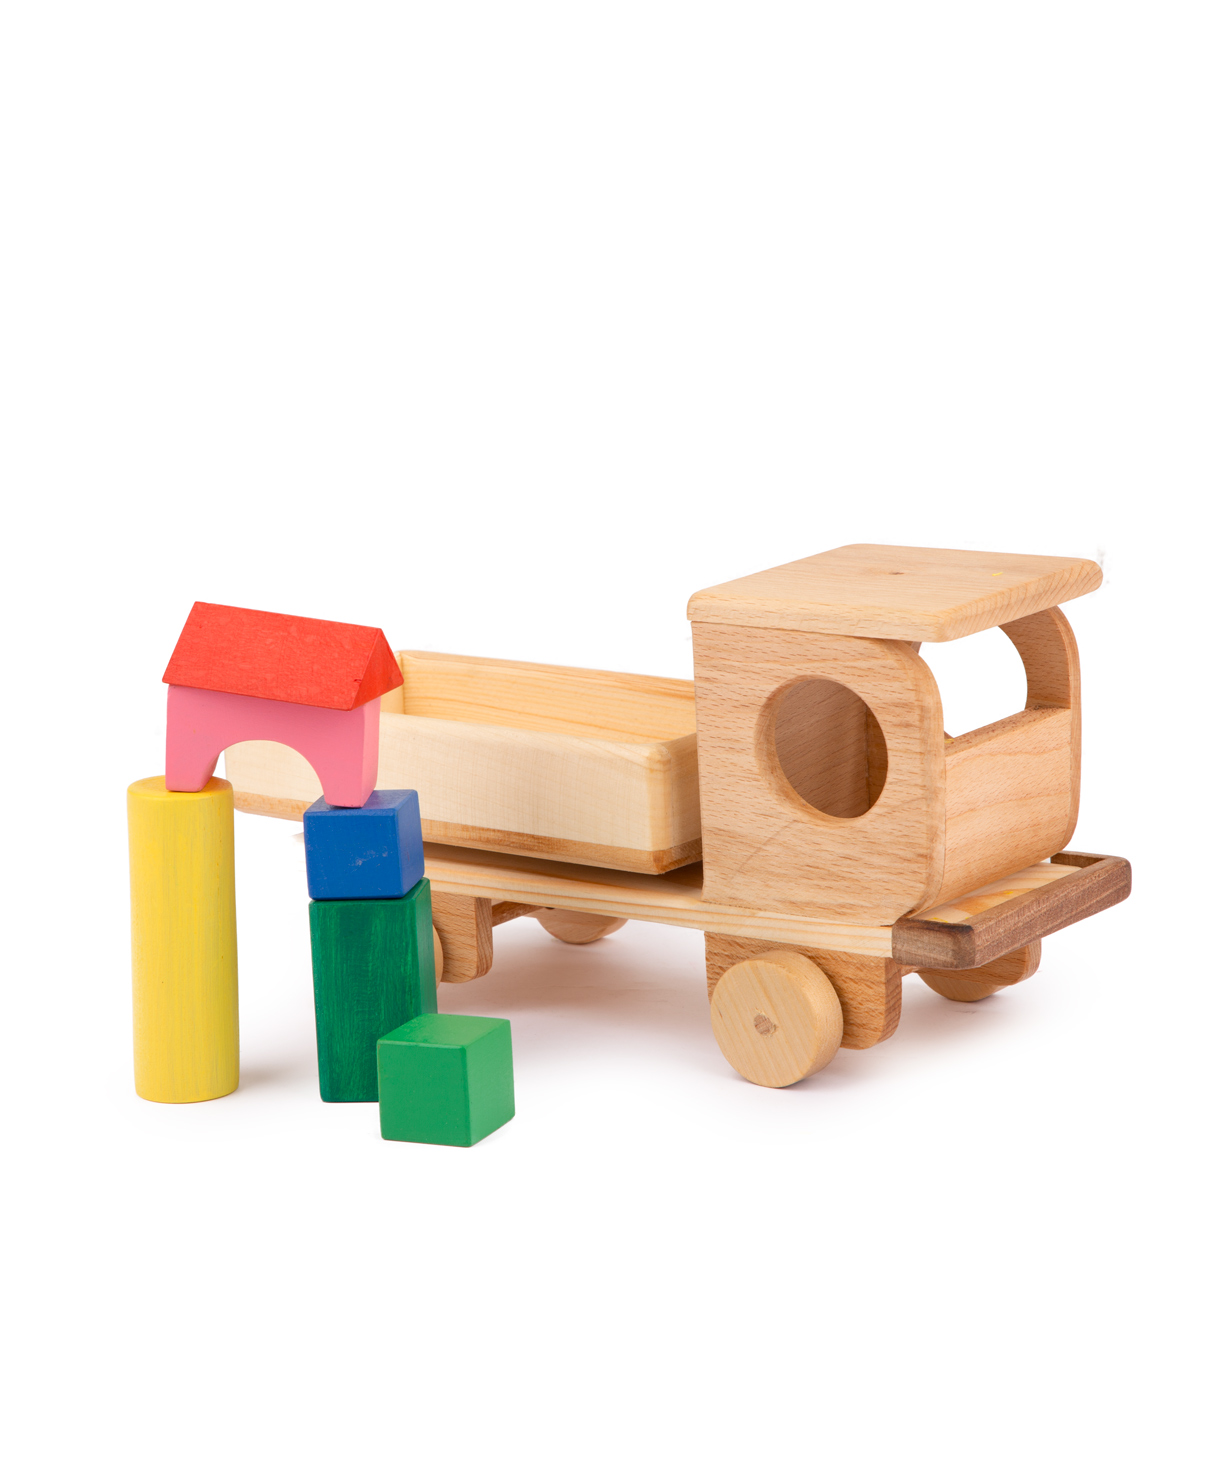 Toy `I'm wooden toys` dump truck